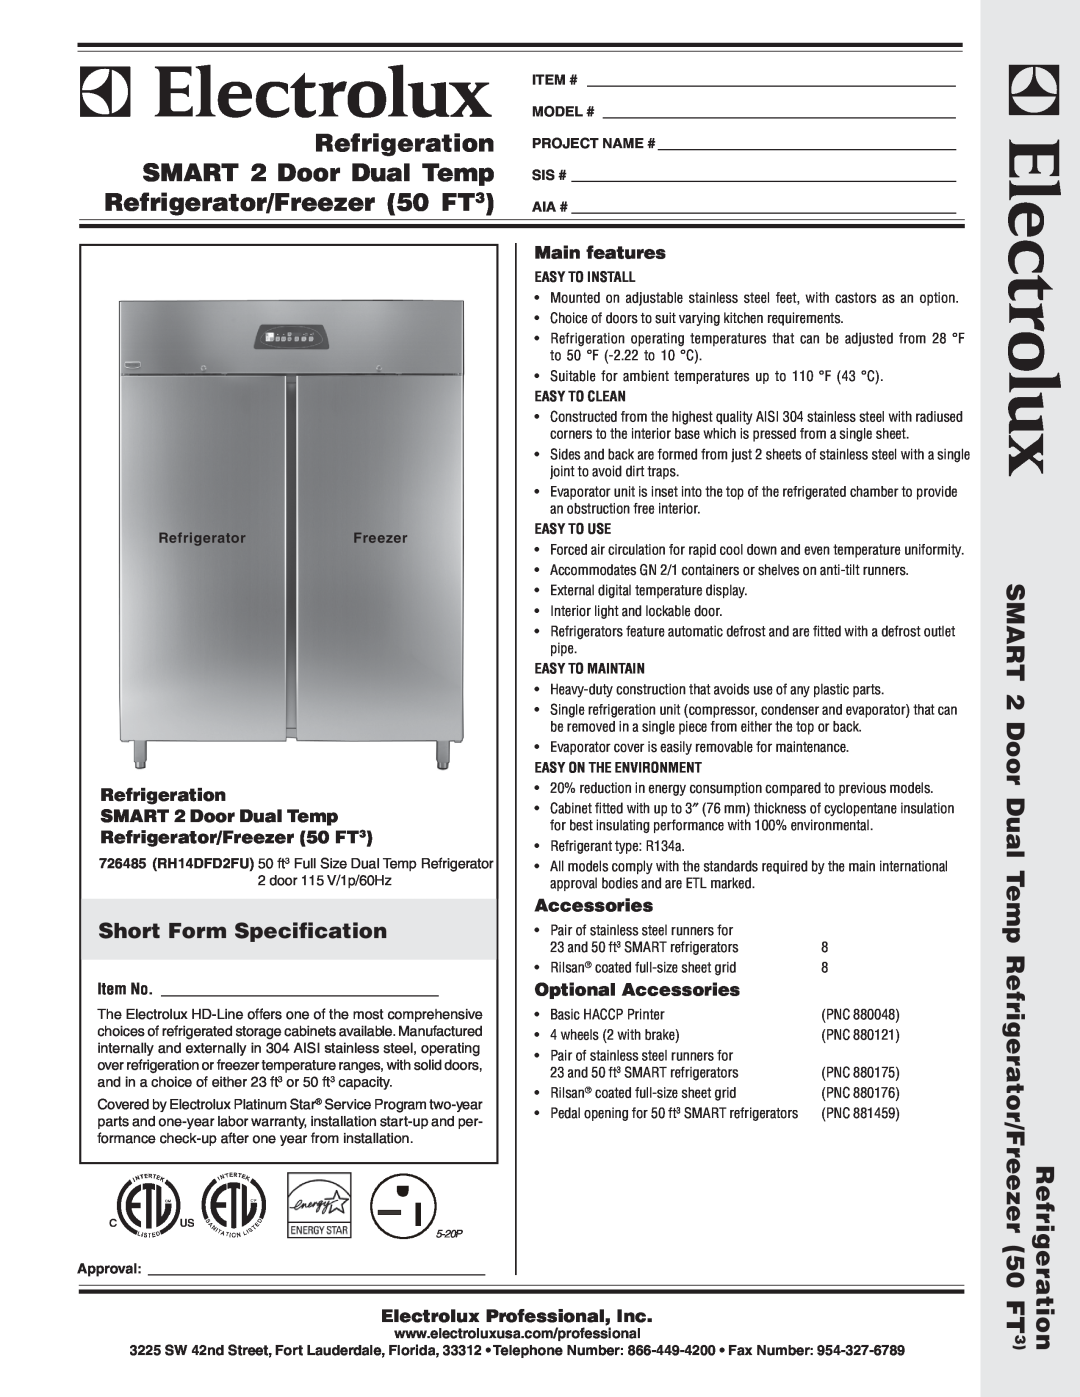 Electrolux 726485 warranty Short Form Specification, Main features, Refrigeration, SMART 2 Door Dual Temp, Accessories 